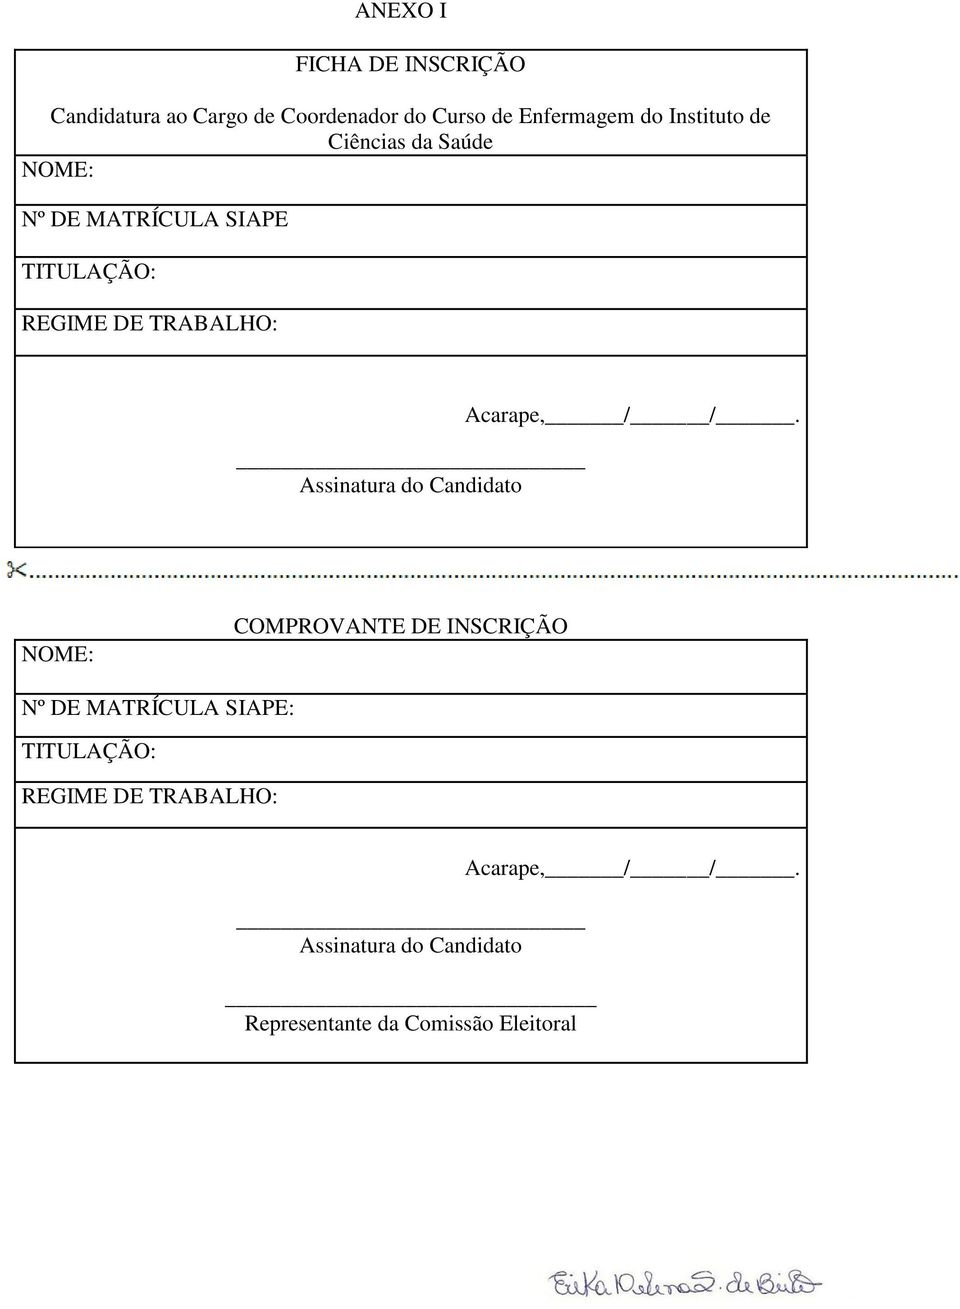 Assinatura do Candidato Acarape, / /.